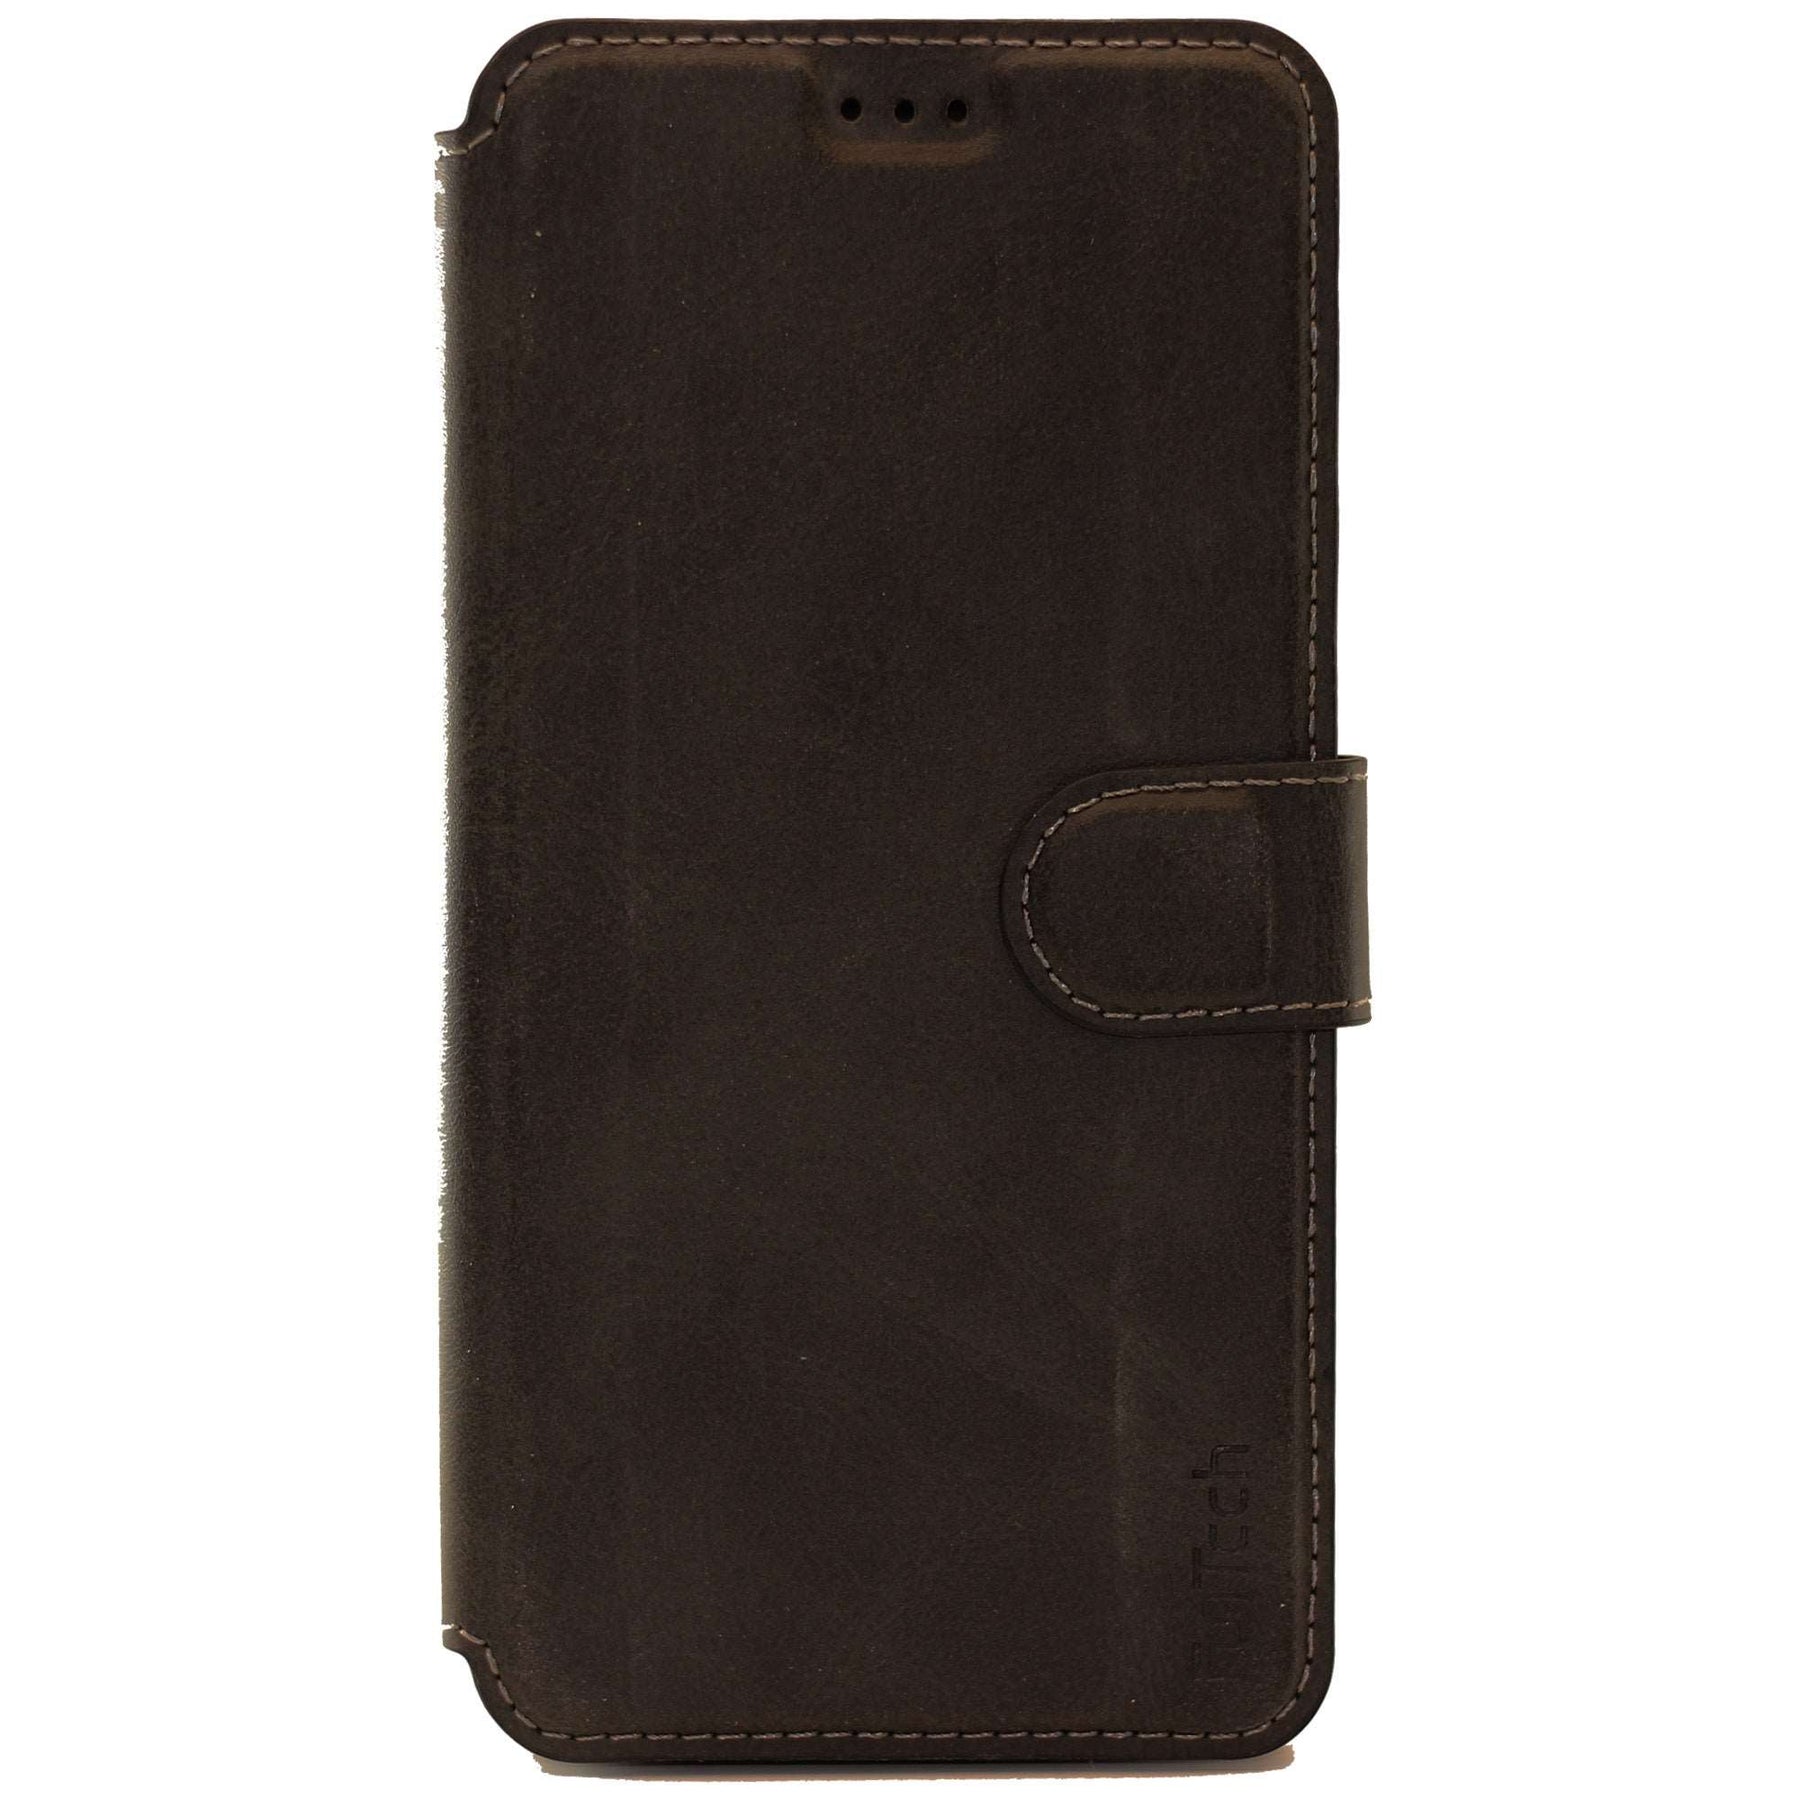 Apple iPhone 11 Pro MAX Leather Wallet Case Color Black